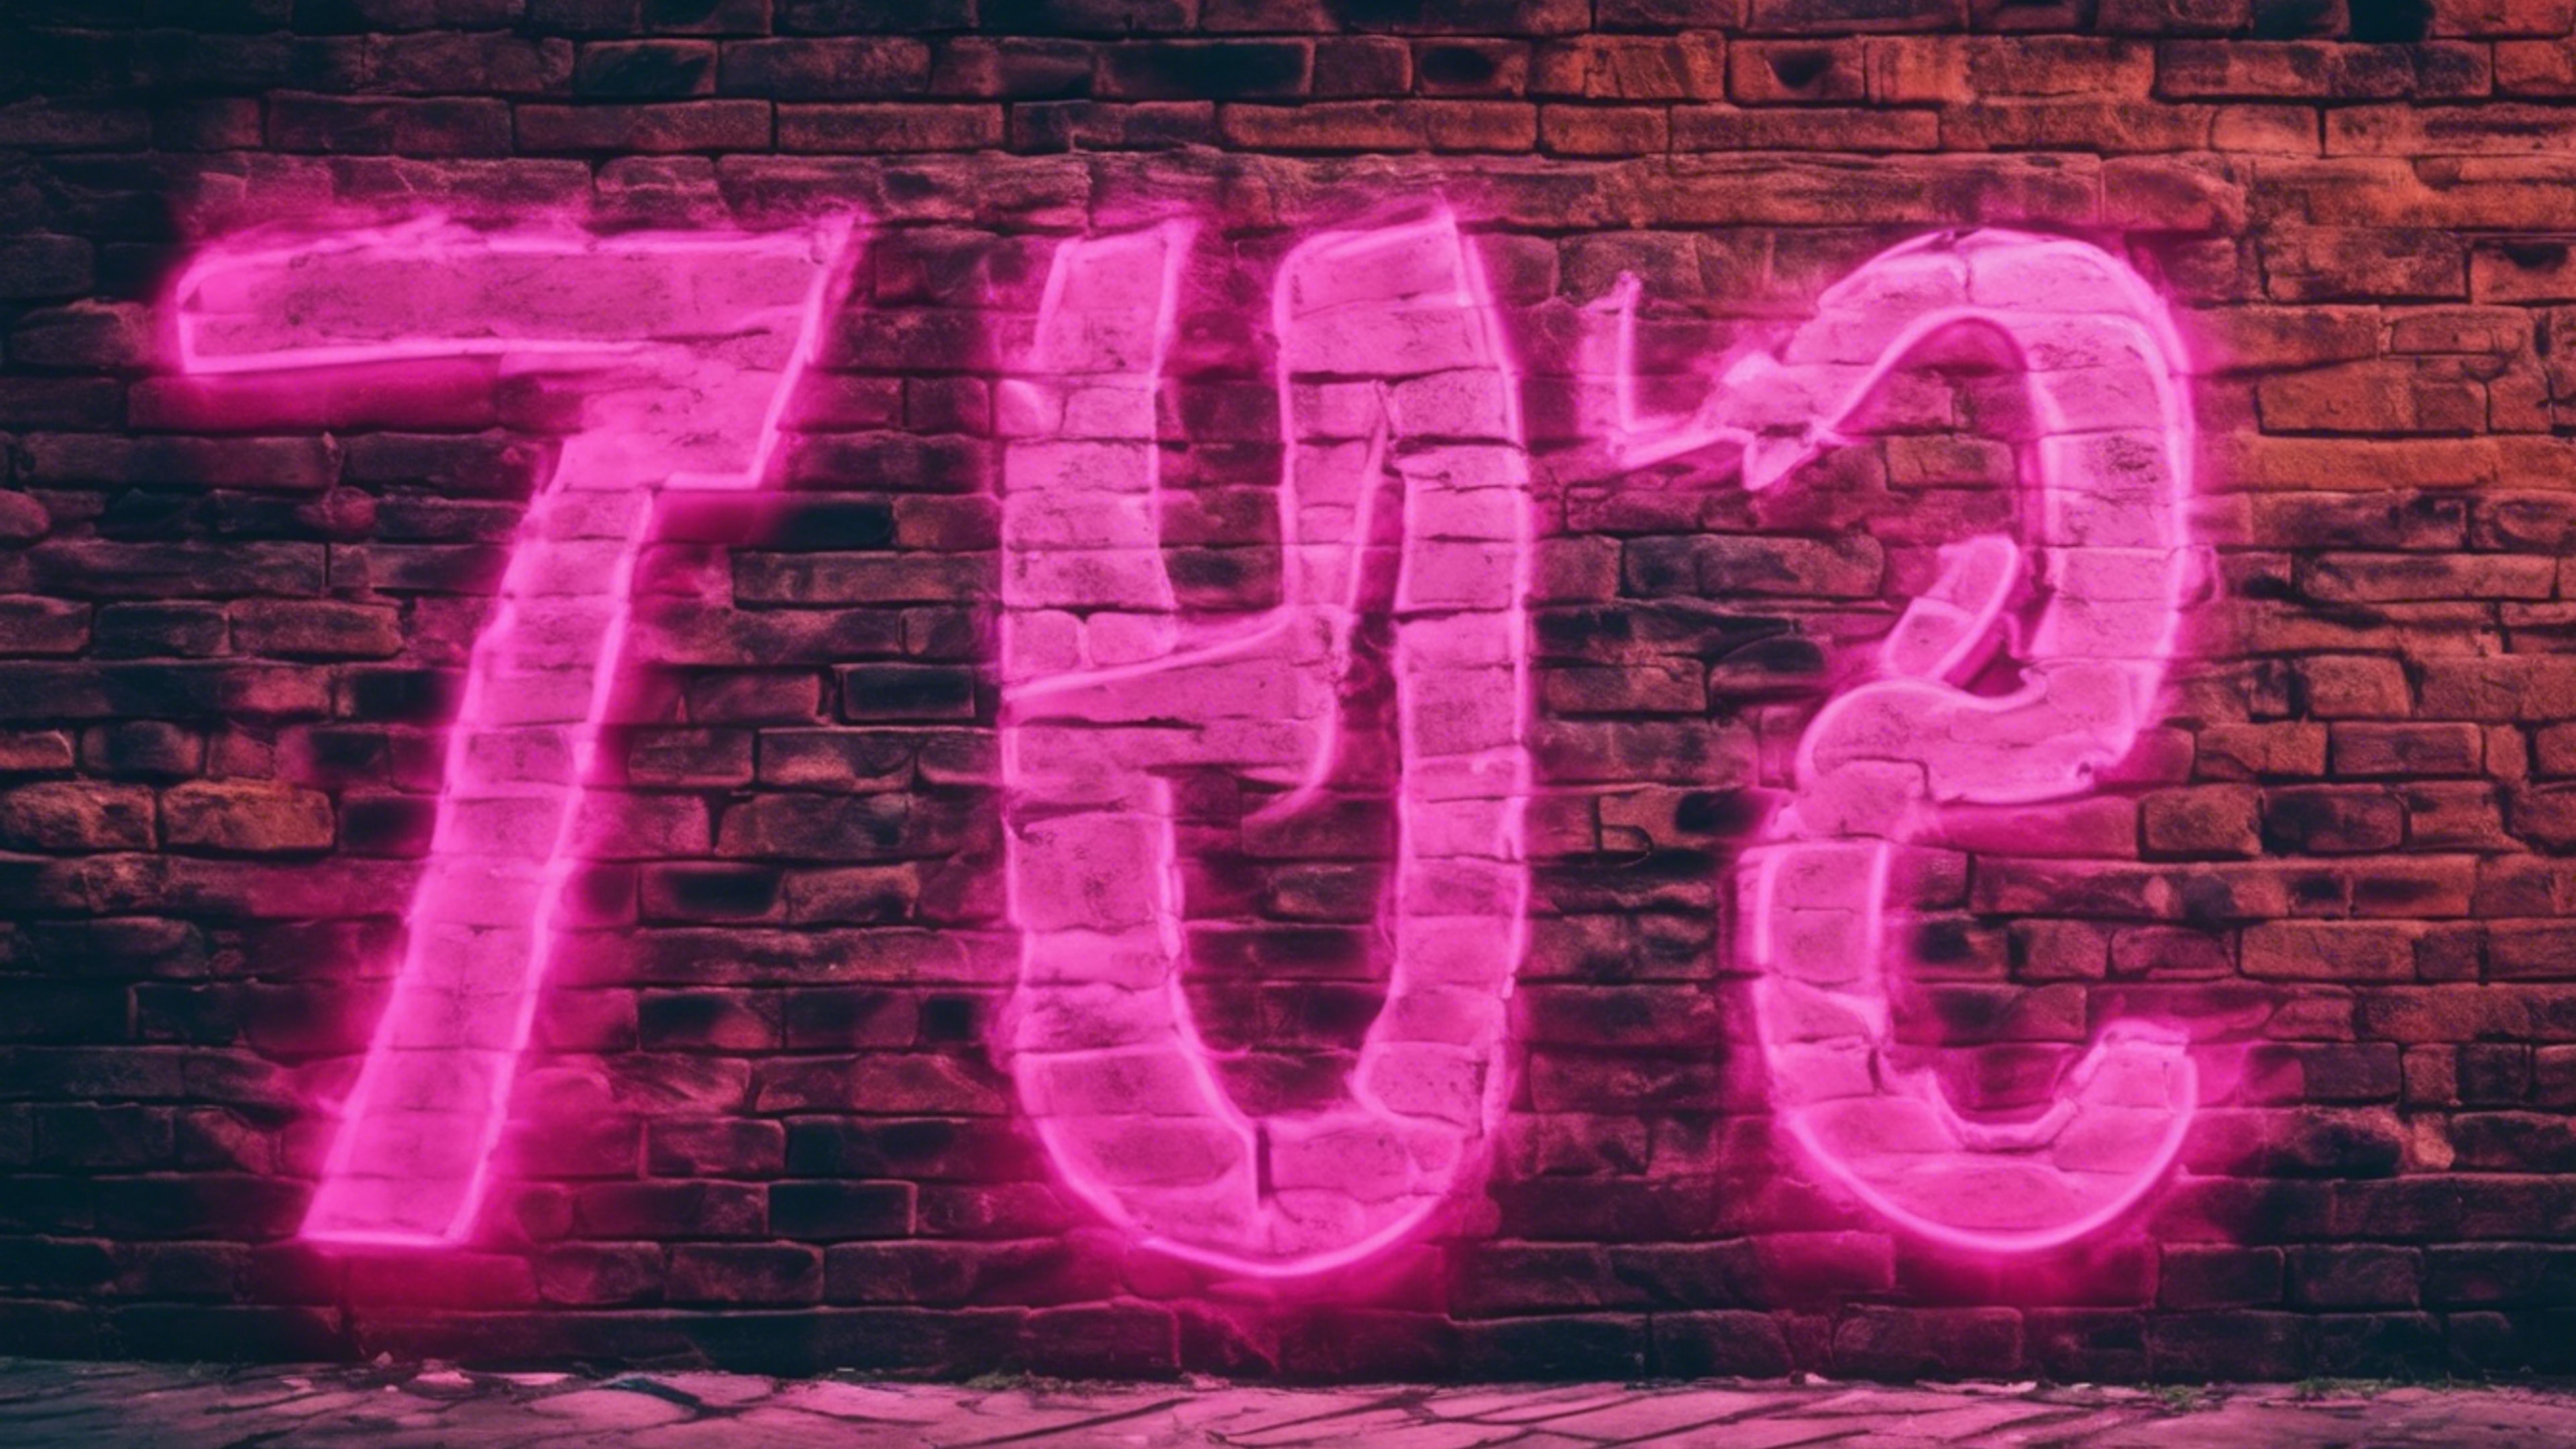 A bright neon pink graffiti on an old brick wall in an urban setting.壁紙[f64c7f440a704c87afc0]